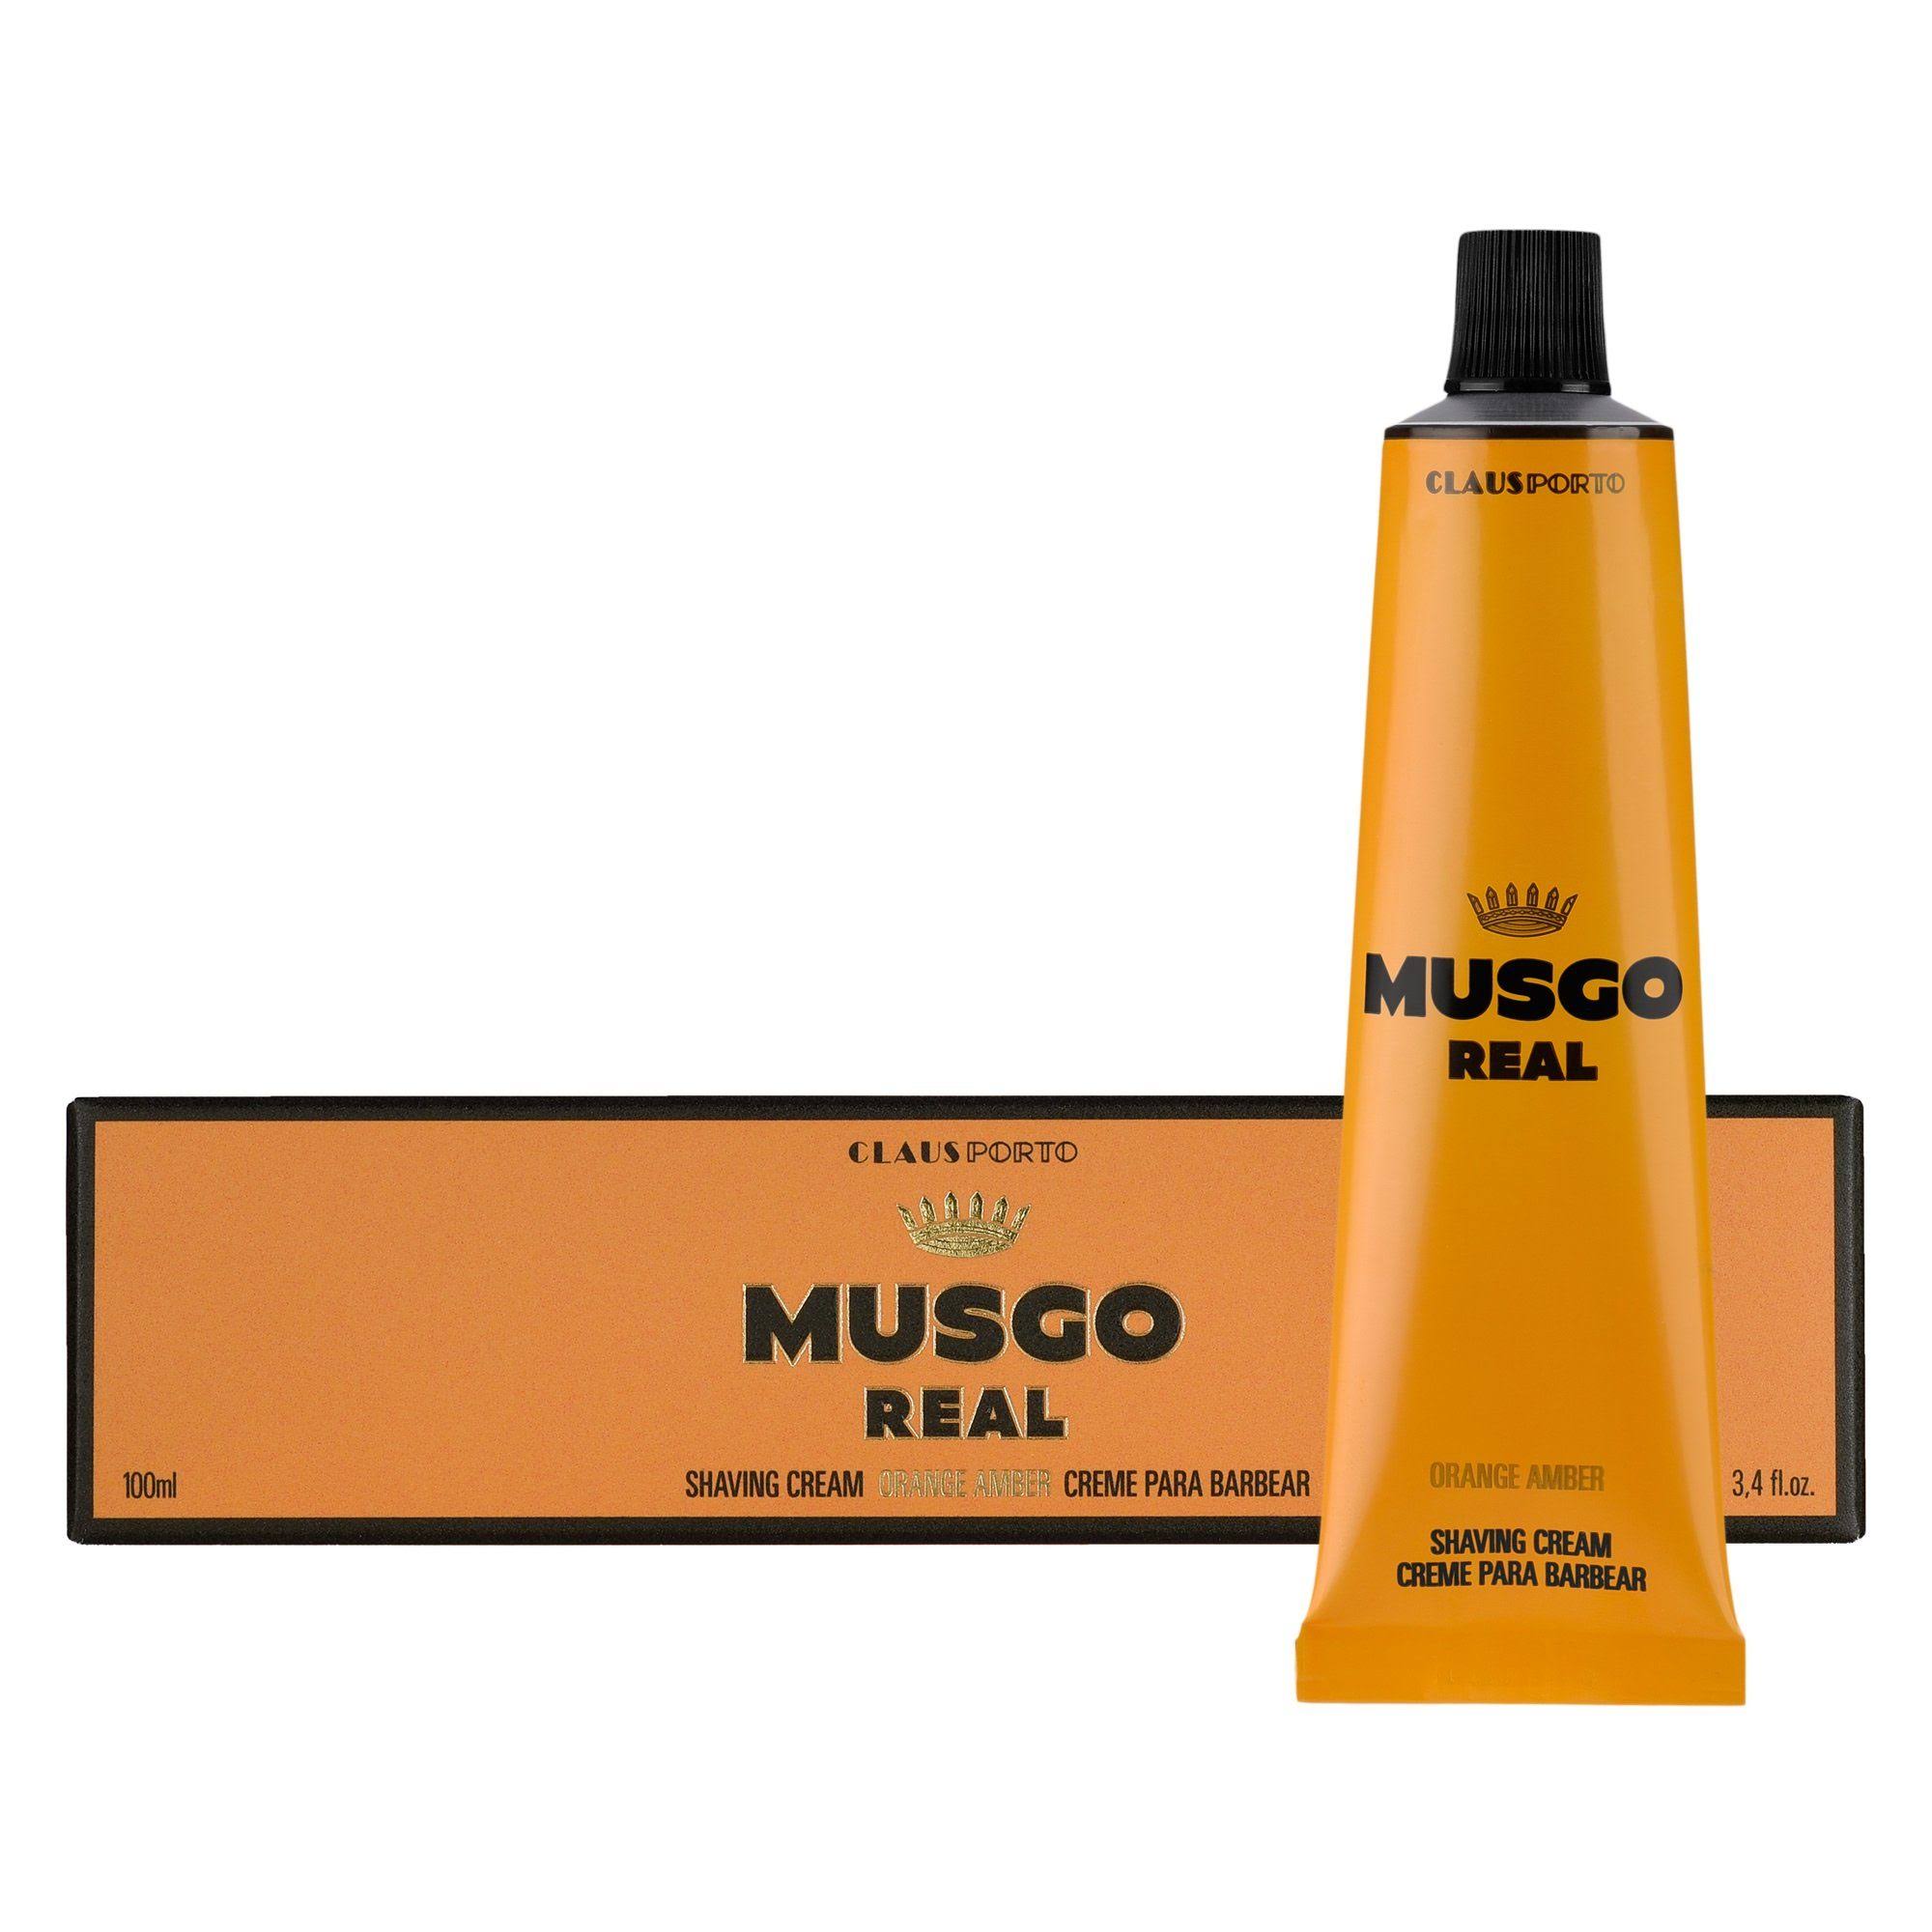 Musgo Real Shaving Cream - Orange Amber, 3.4oz